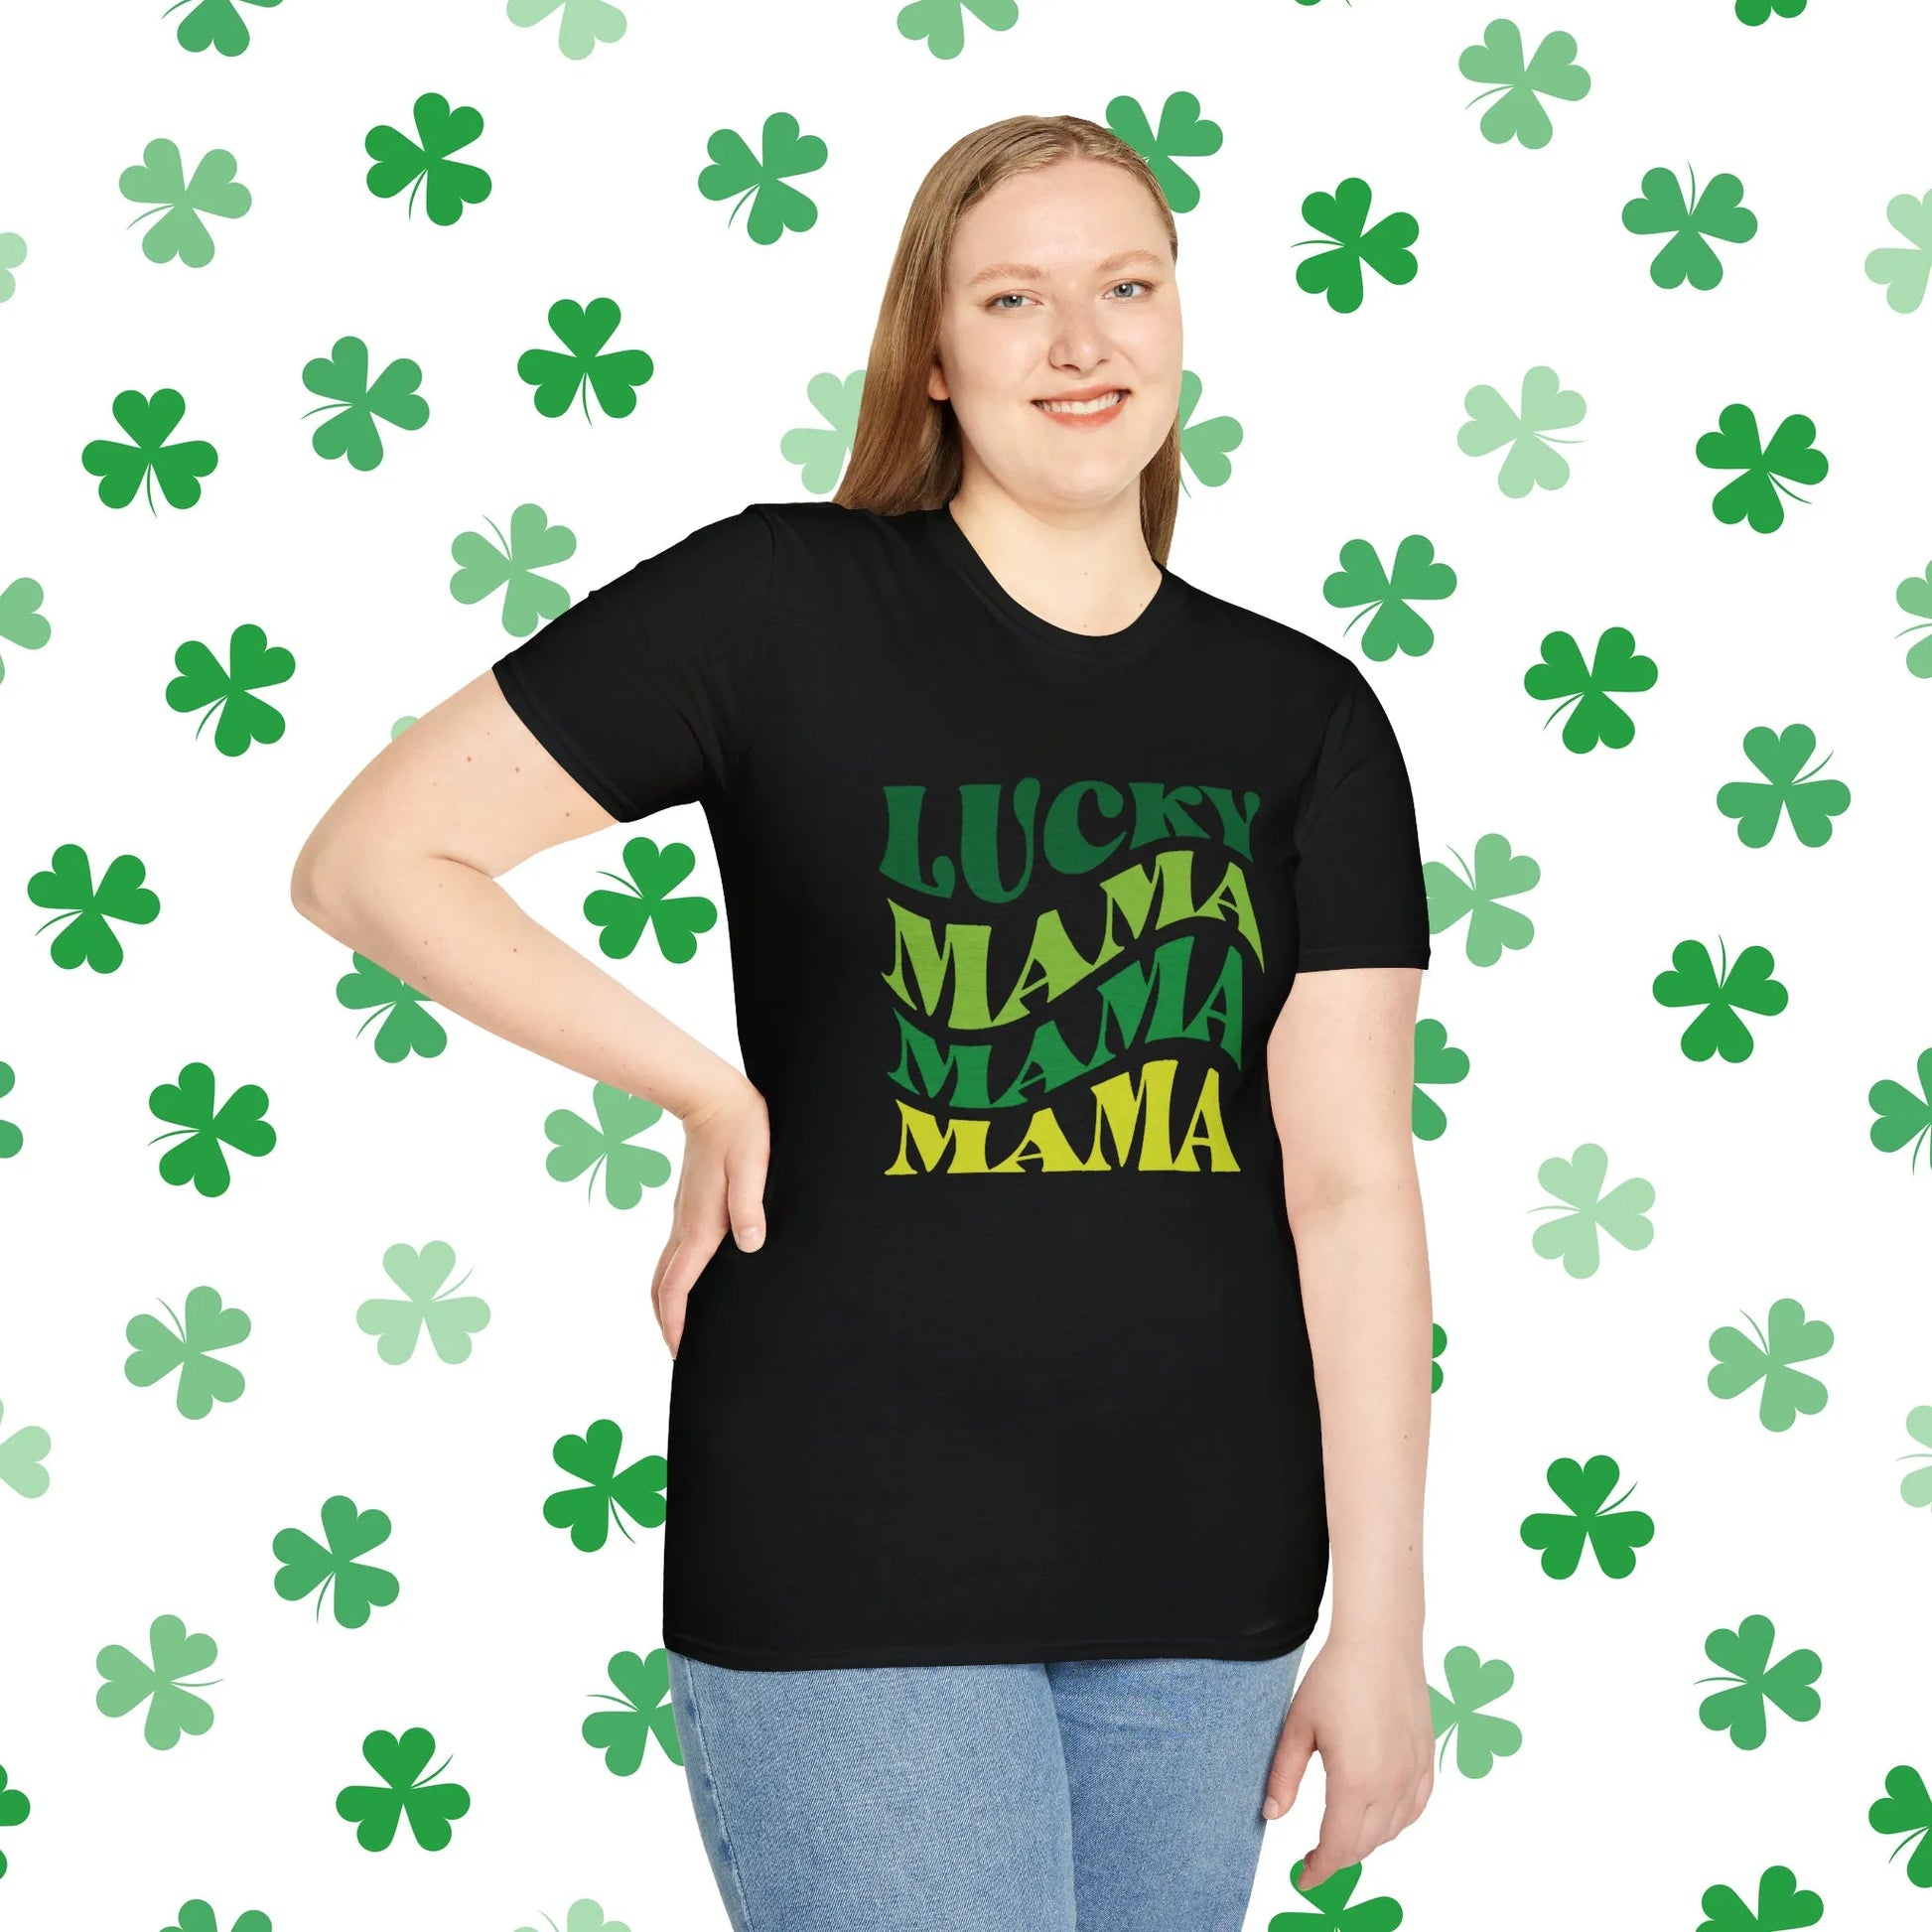 Lucky Mama Mama Mama Retro-Style St. Patrick's Day T-Shirt - Comfort & Charm - St. Patrick's Day Mom Shirt Black